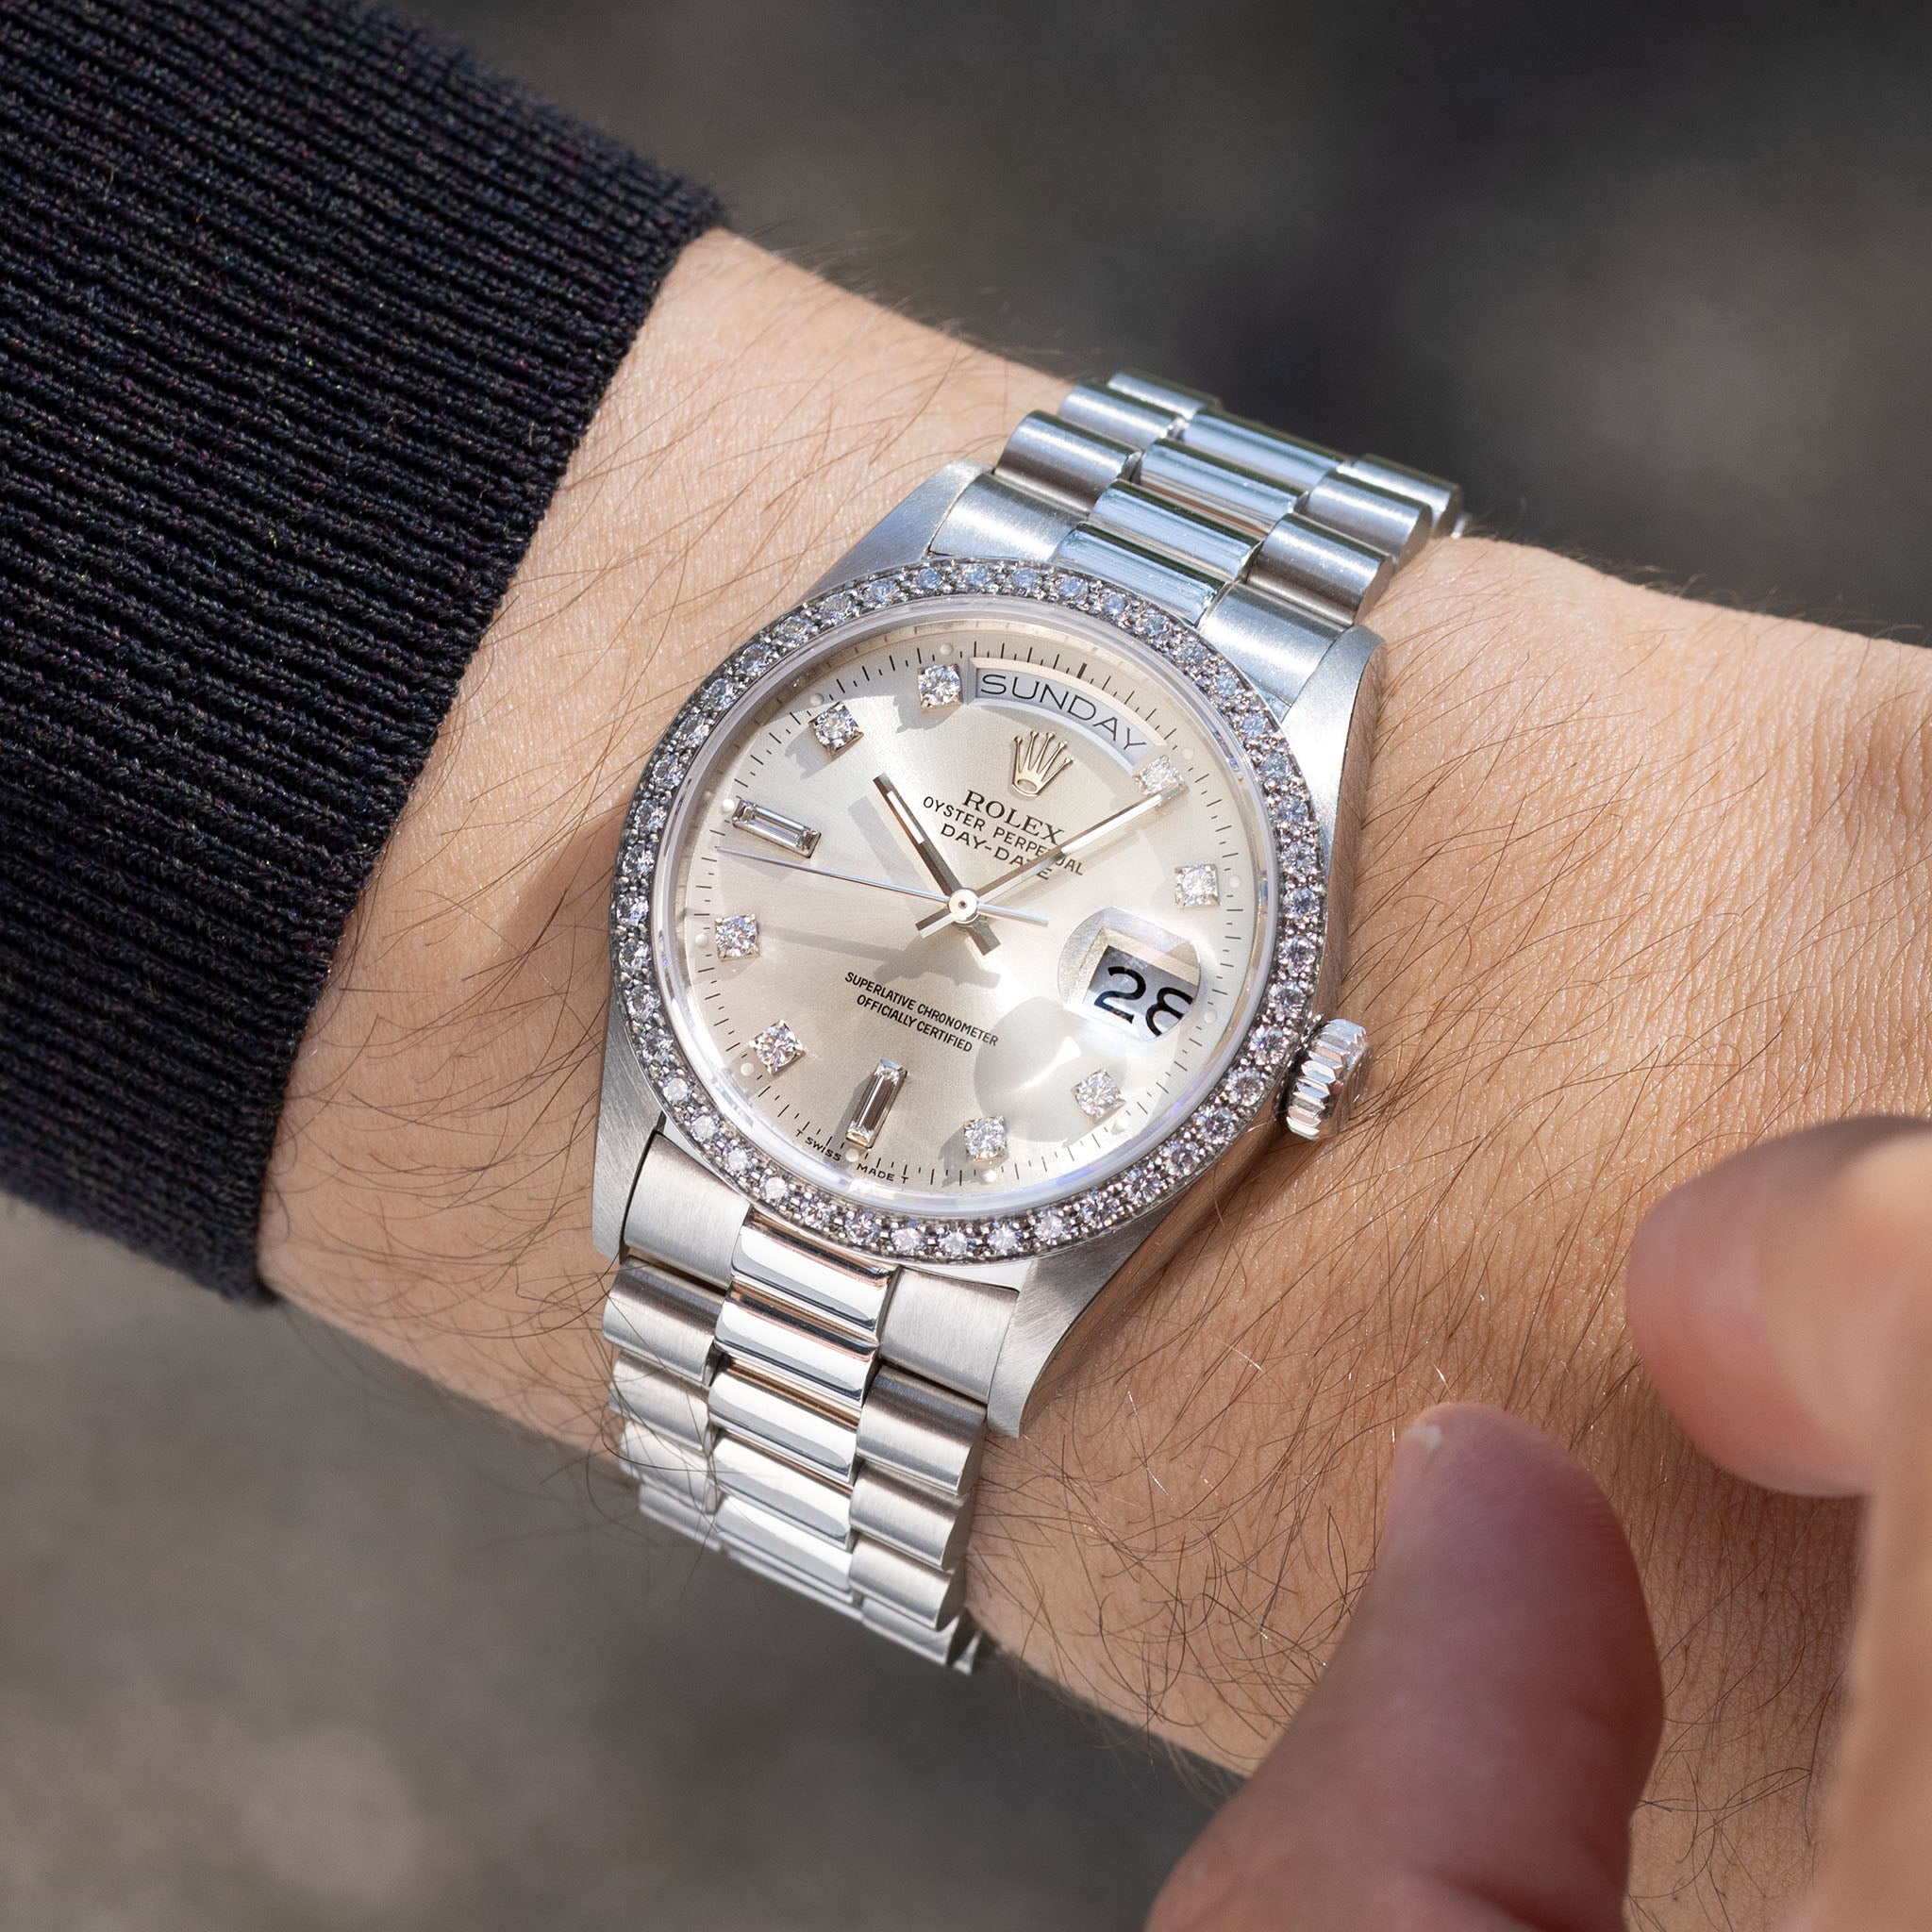 Rolex Day-Date platinum 18046 big diamond dial - incoming